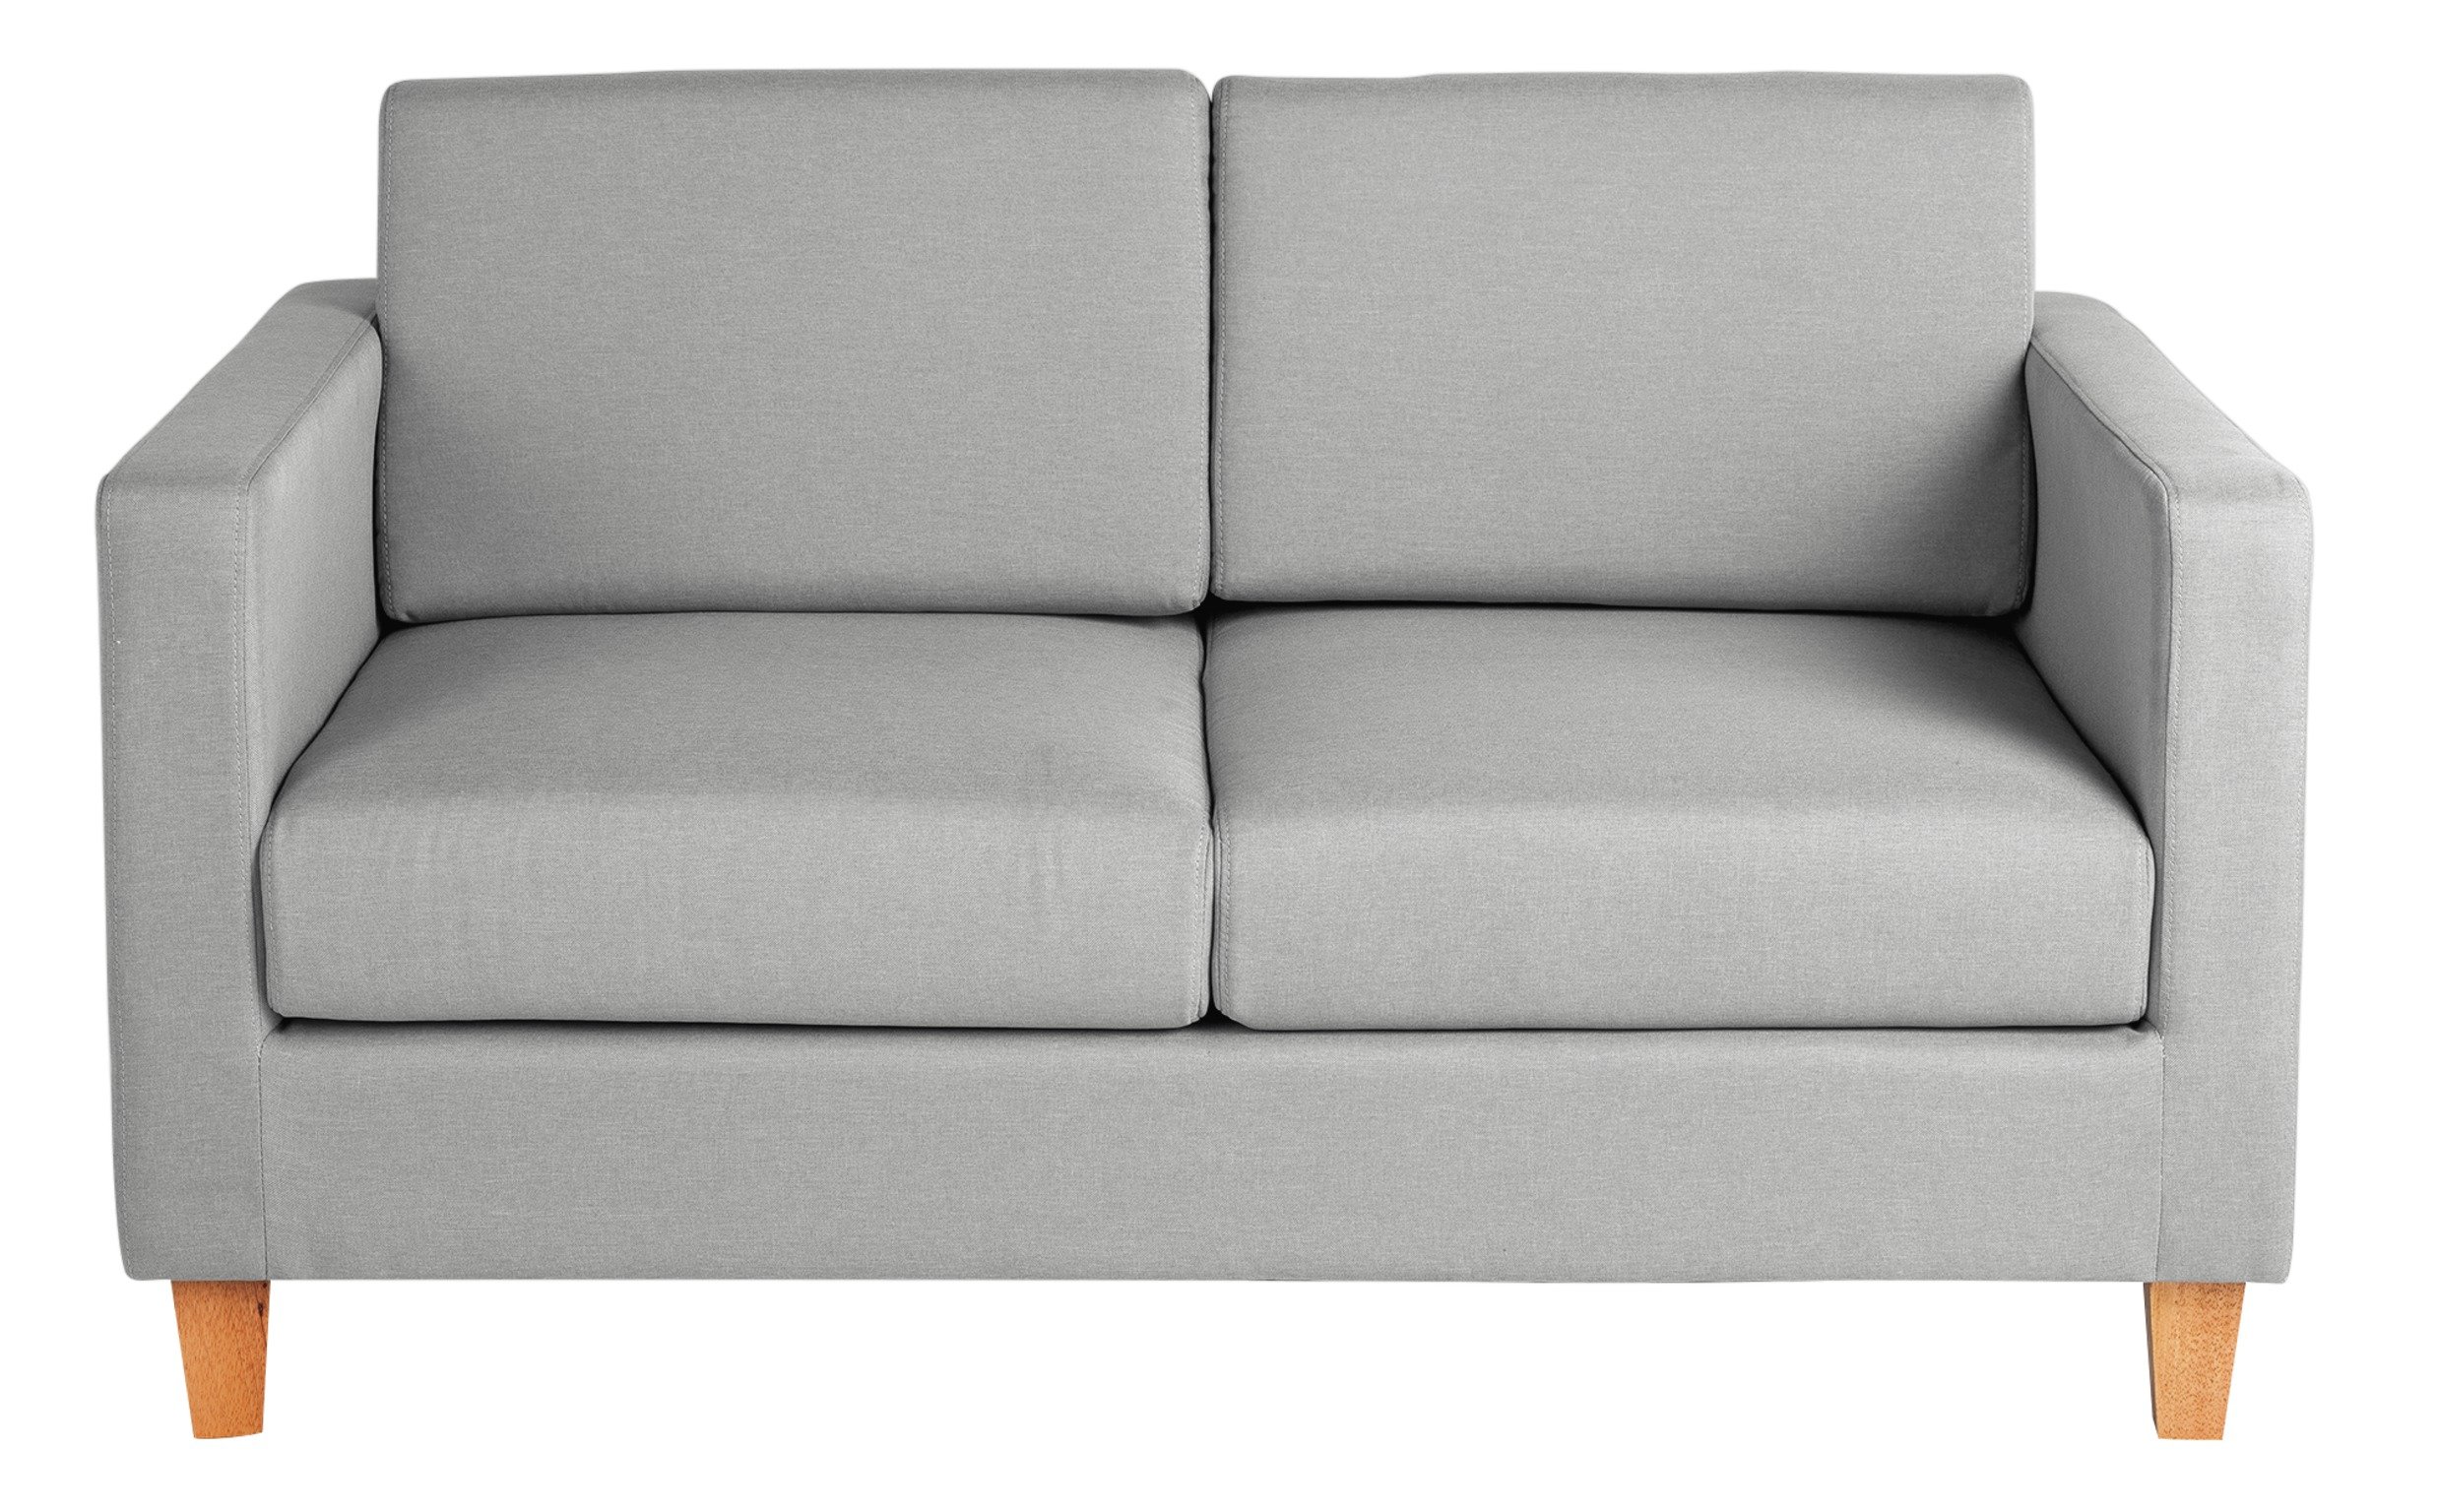 Argos Home Rosie 2 Seater Fabric Sofa Light Grey 7115596